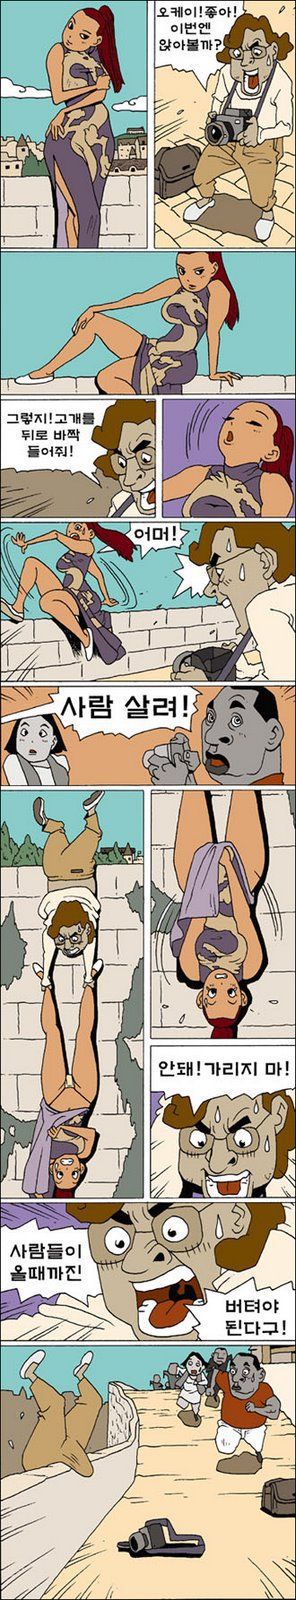 Funny Korean Comics - Yang mau ngakak masuk!!!!